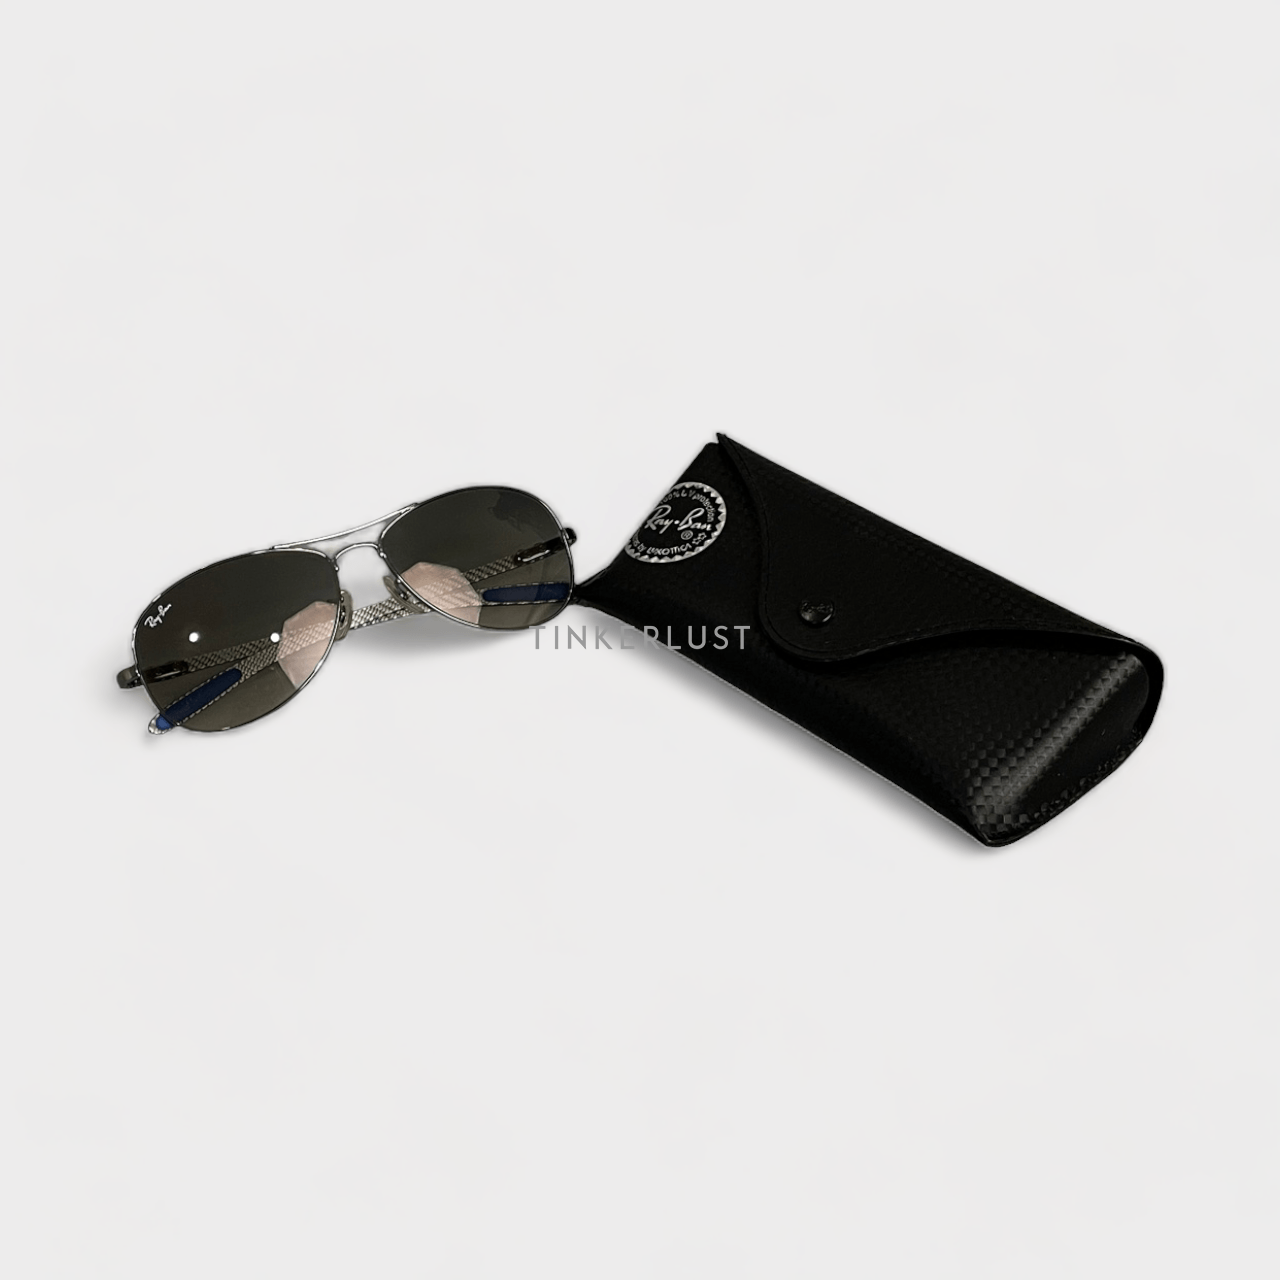 Ray-Ban Silver Sunglasses